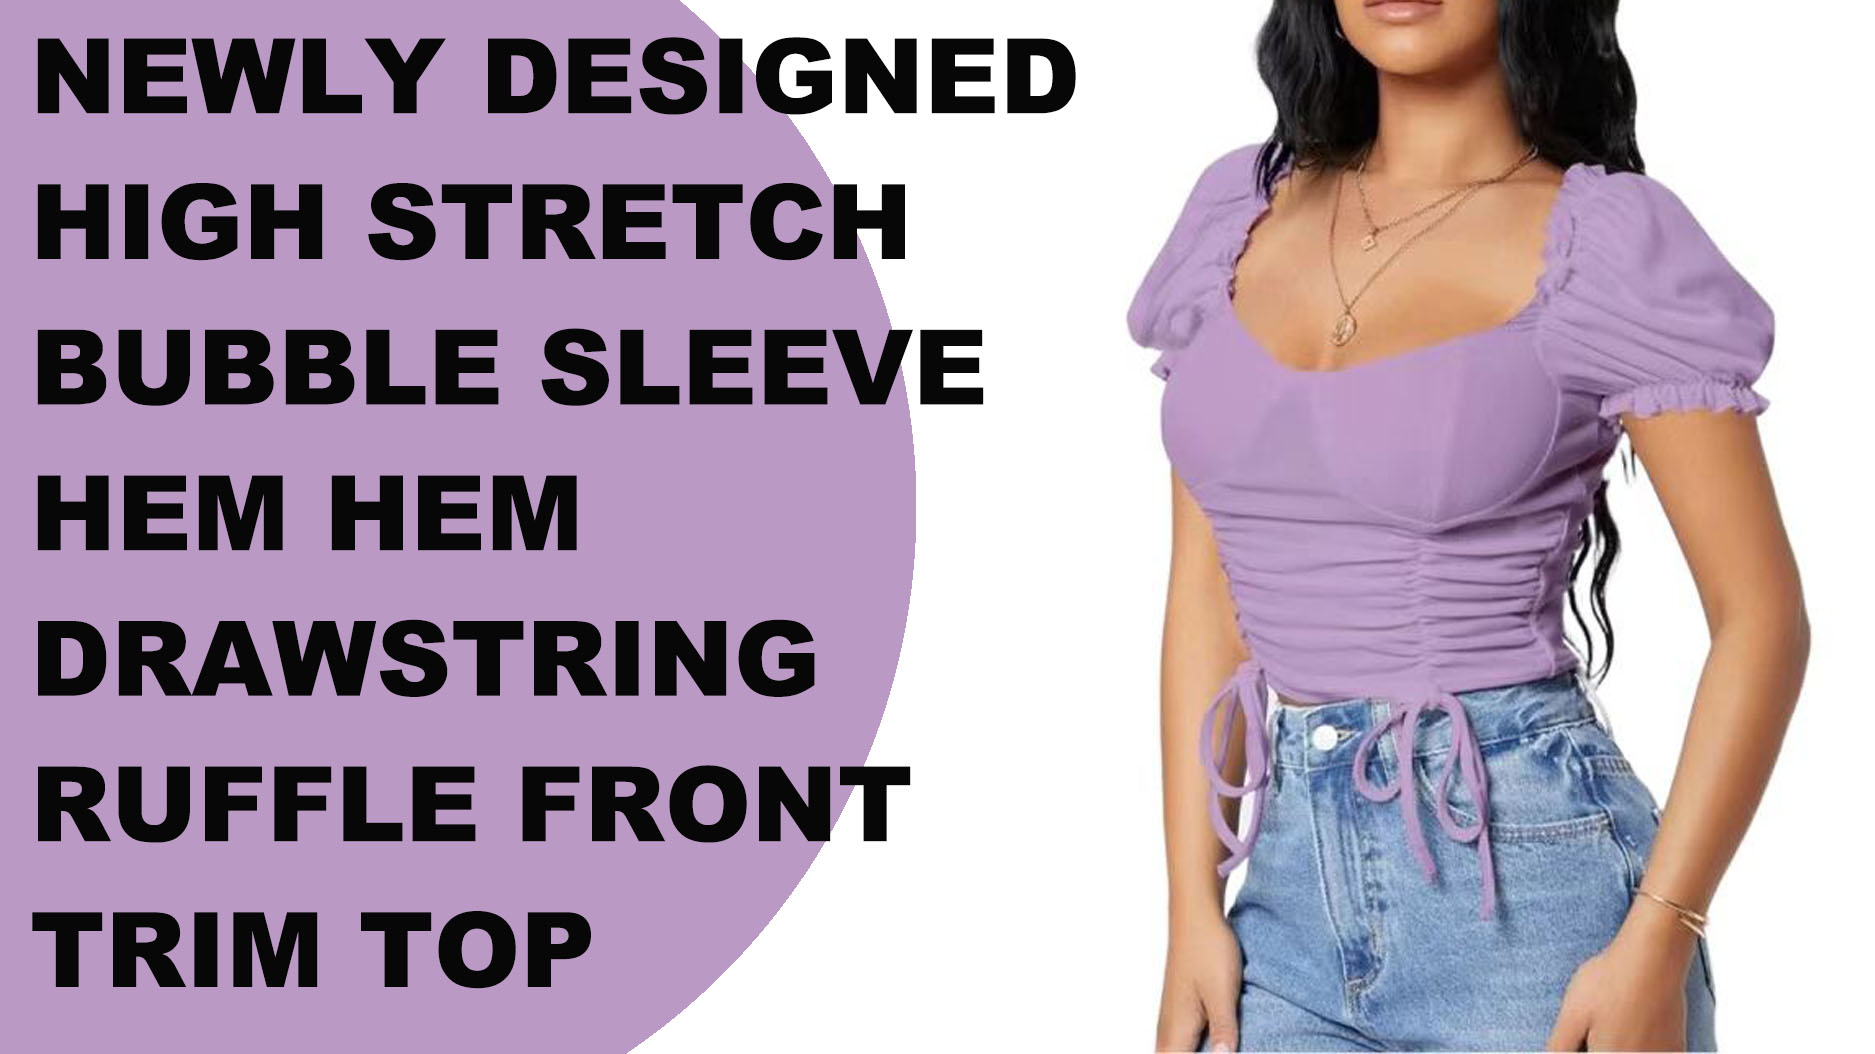 Newly designed high stretch bubble sleeve hem hem drawstring ruffle front trim top for women